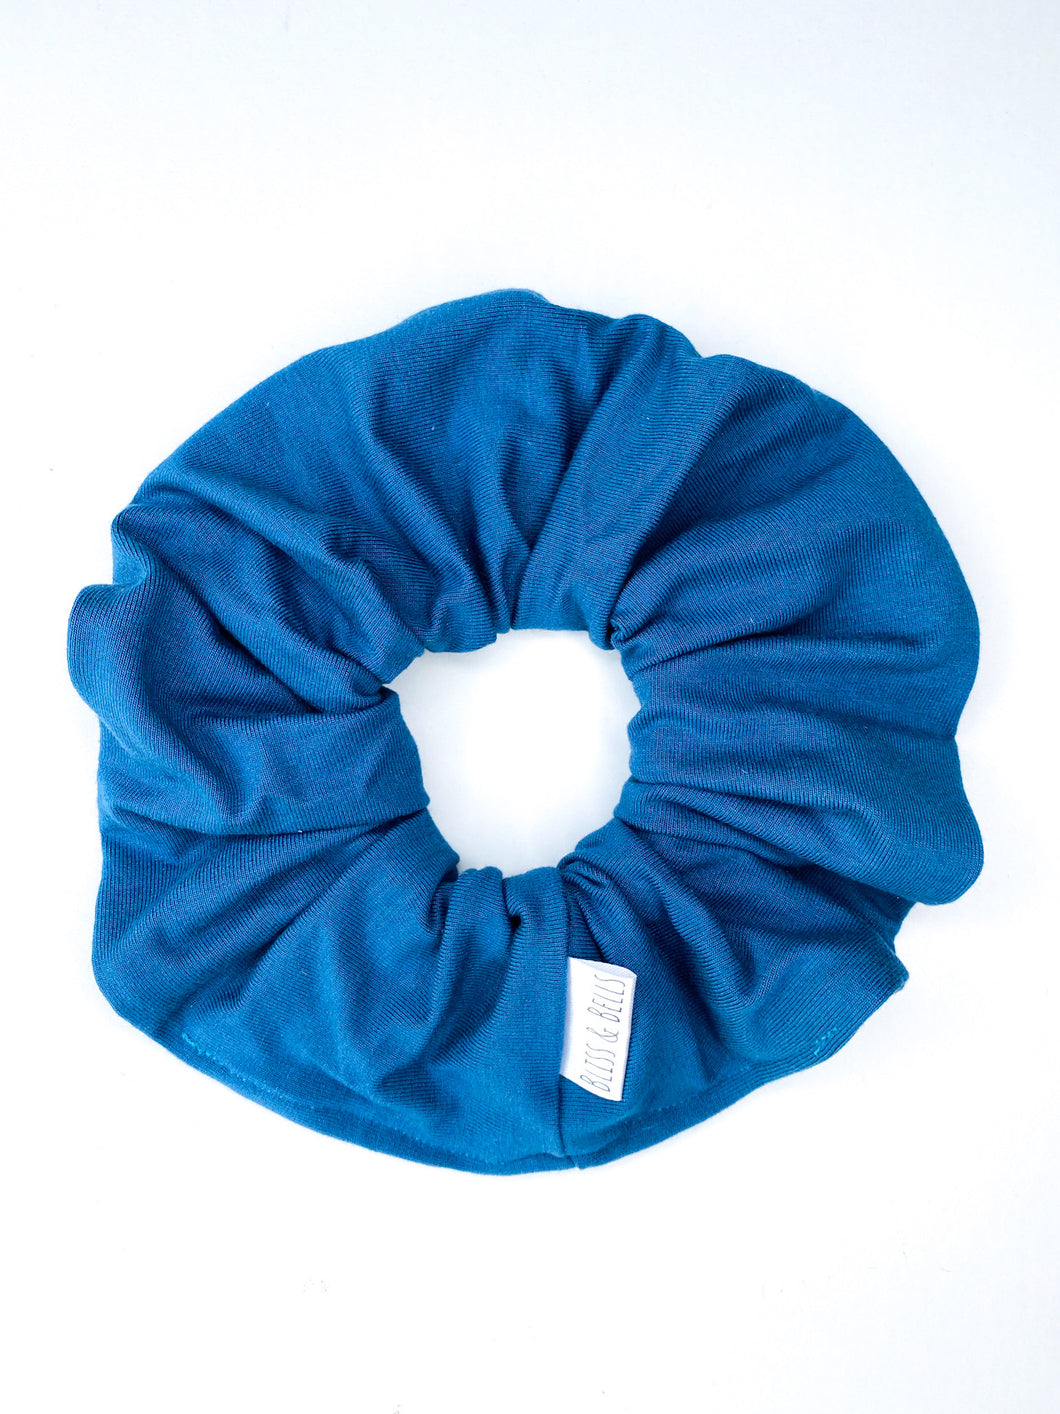 Teal Scrunchie - Handmade - Soft Stretch Knit Fabric